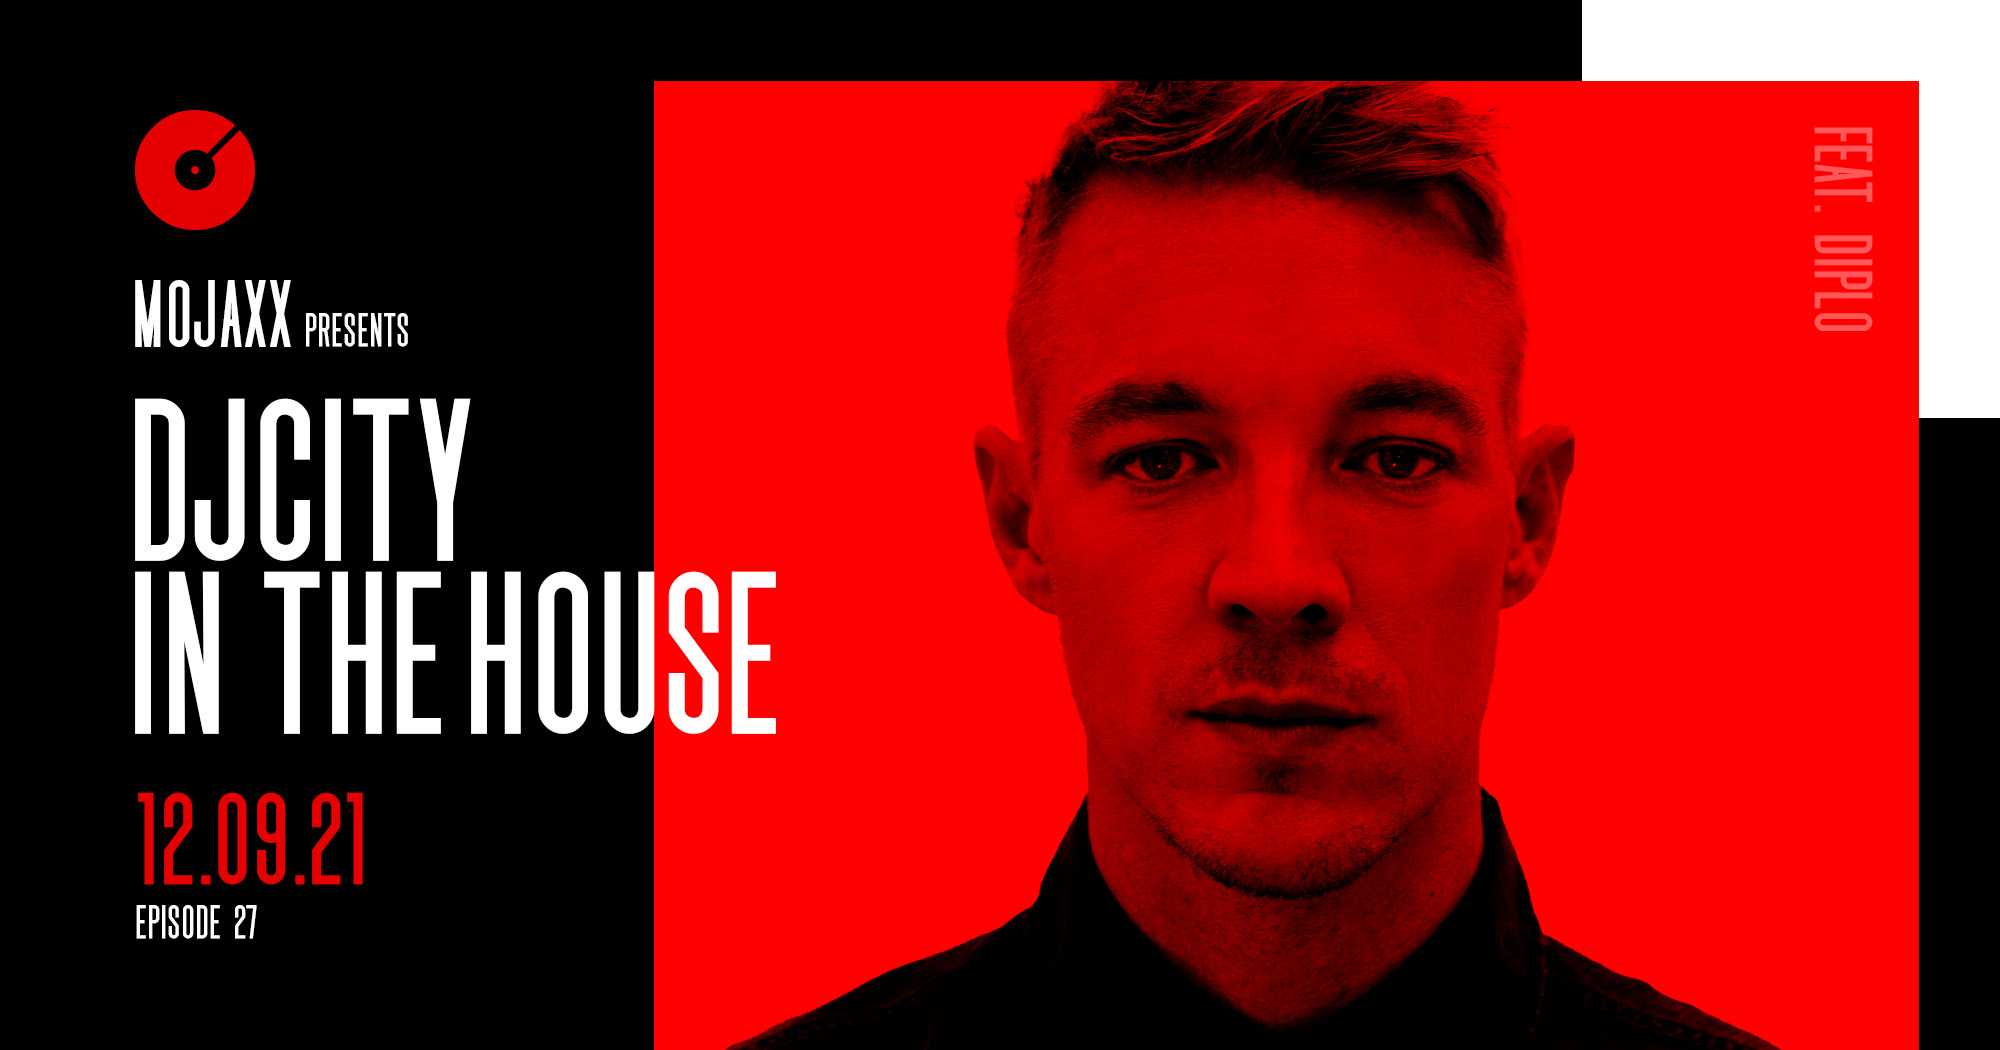 Listen to ‘DJcity in the House’ Feat. Mojaxx: December 9